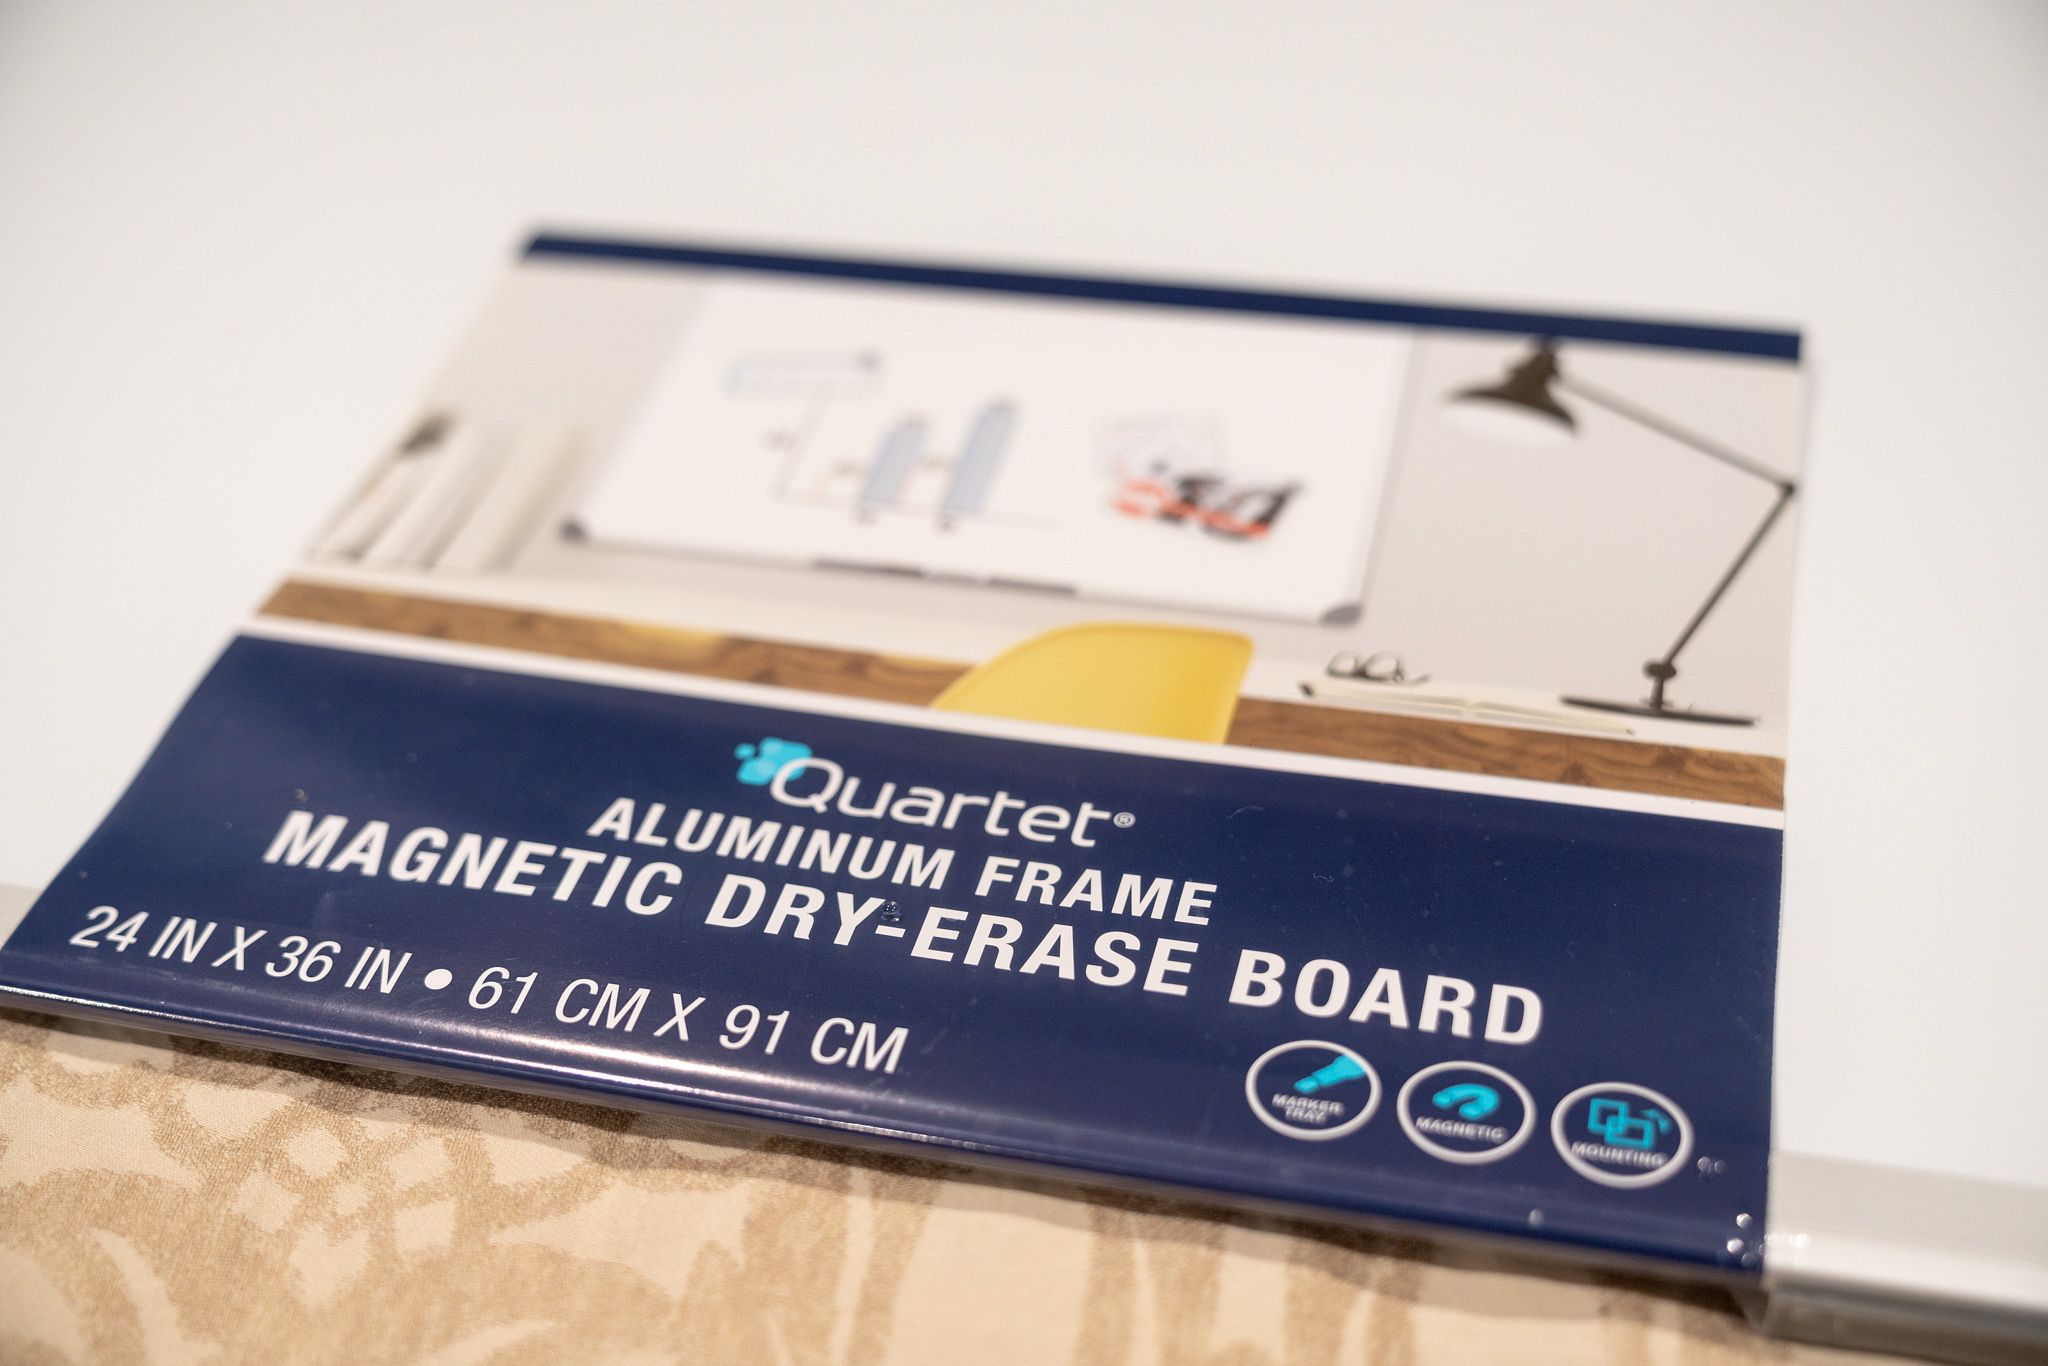 Quartet Aluminum Frame Magnetic Dry-Erase Board